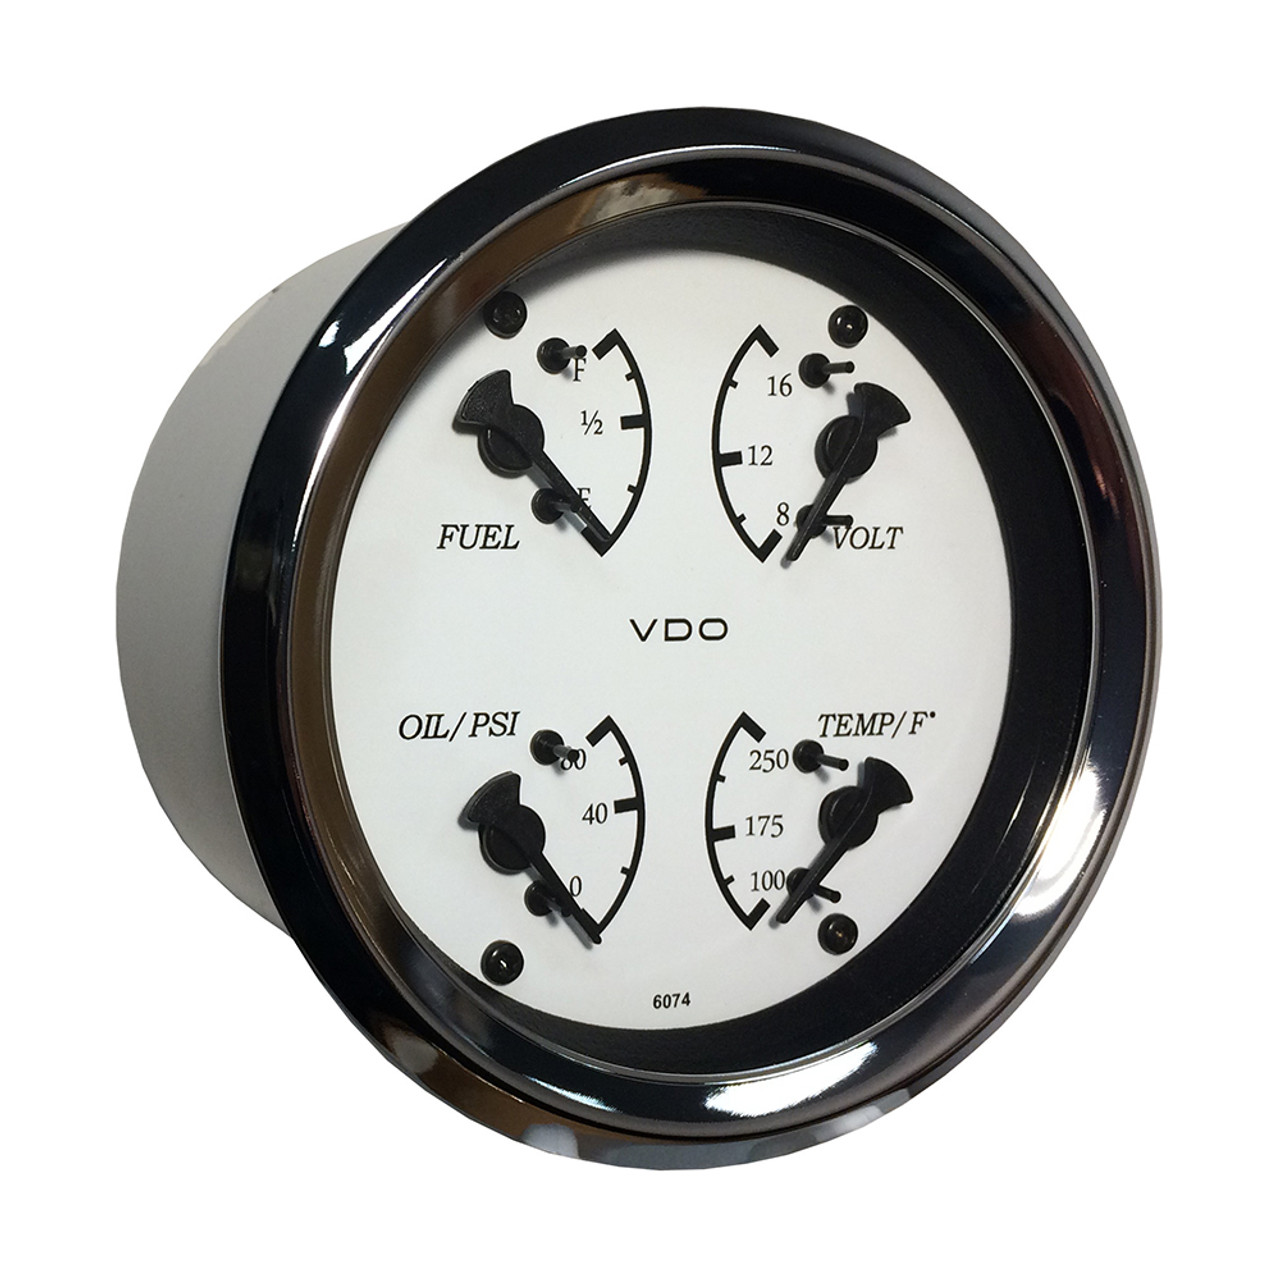 VDO Allentare 4 In 1 Gauge - 85mm - White Dial/Black Pointer - Oil Pressure, Water Temp, Fuel Level, Voltmeter - Chrome Bezel